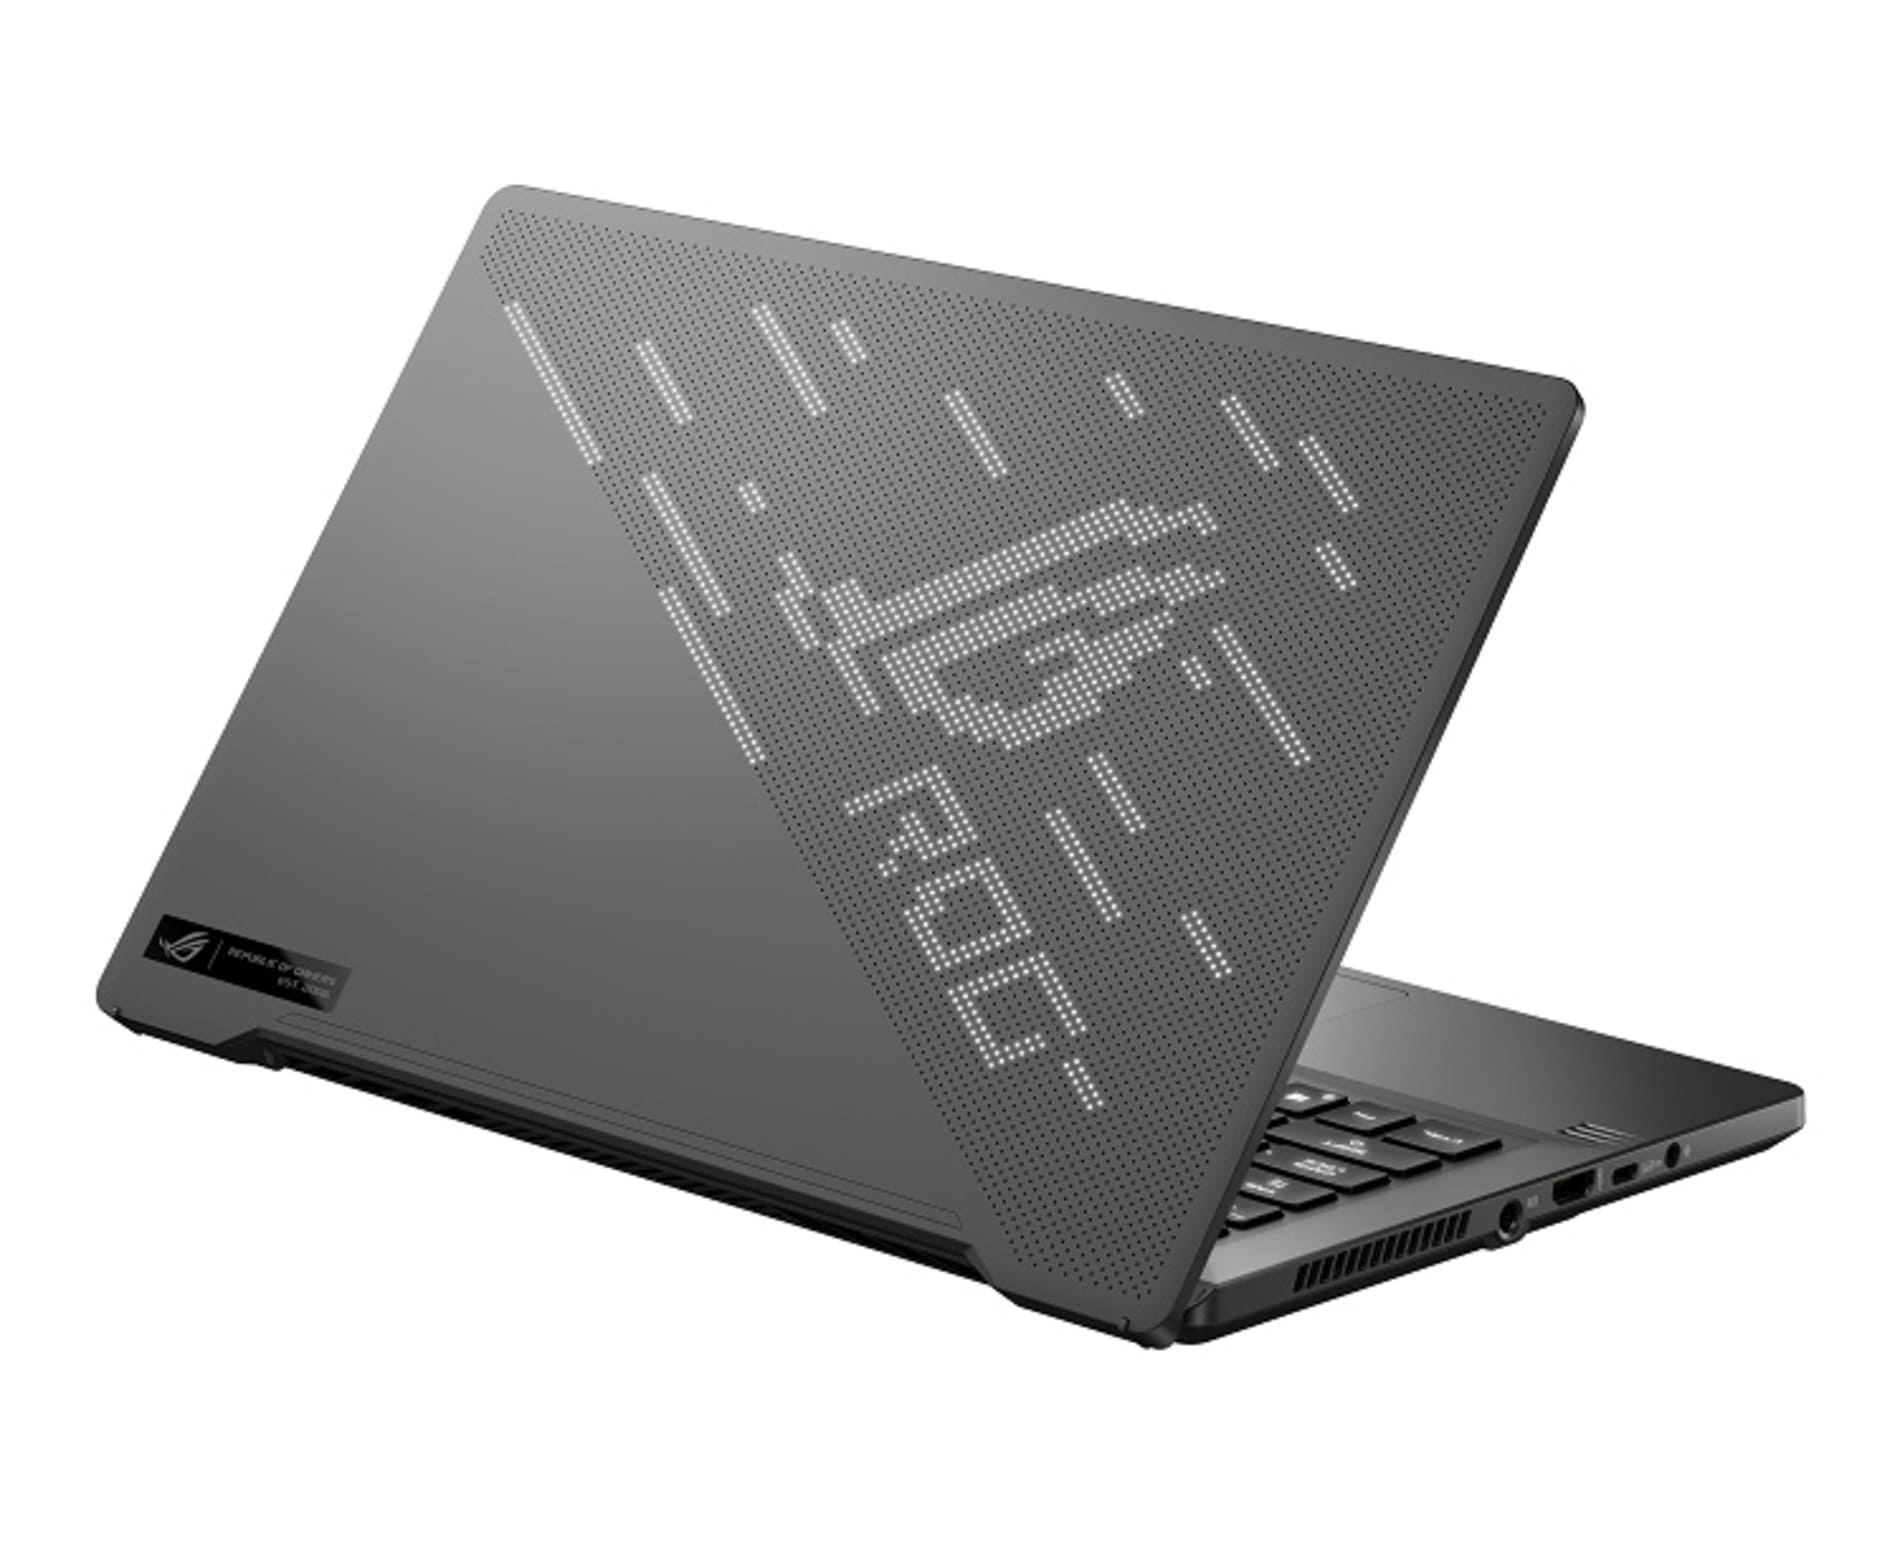 Asus представила концепт ігрового ноутбука Zephyrus G14 з кольоровим екраном з електронного паперу